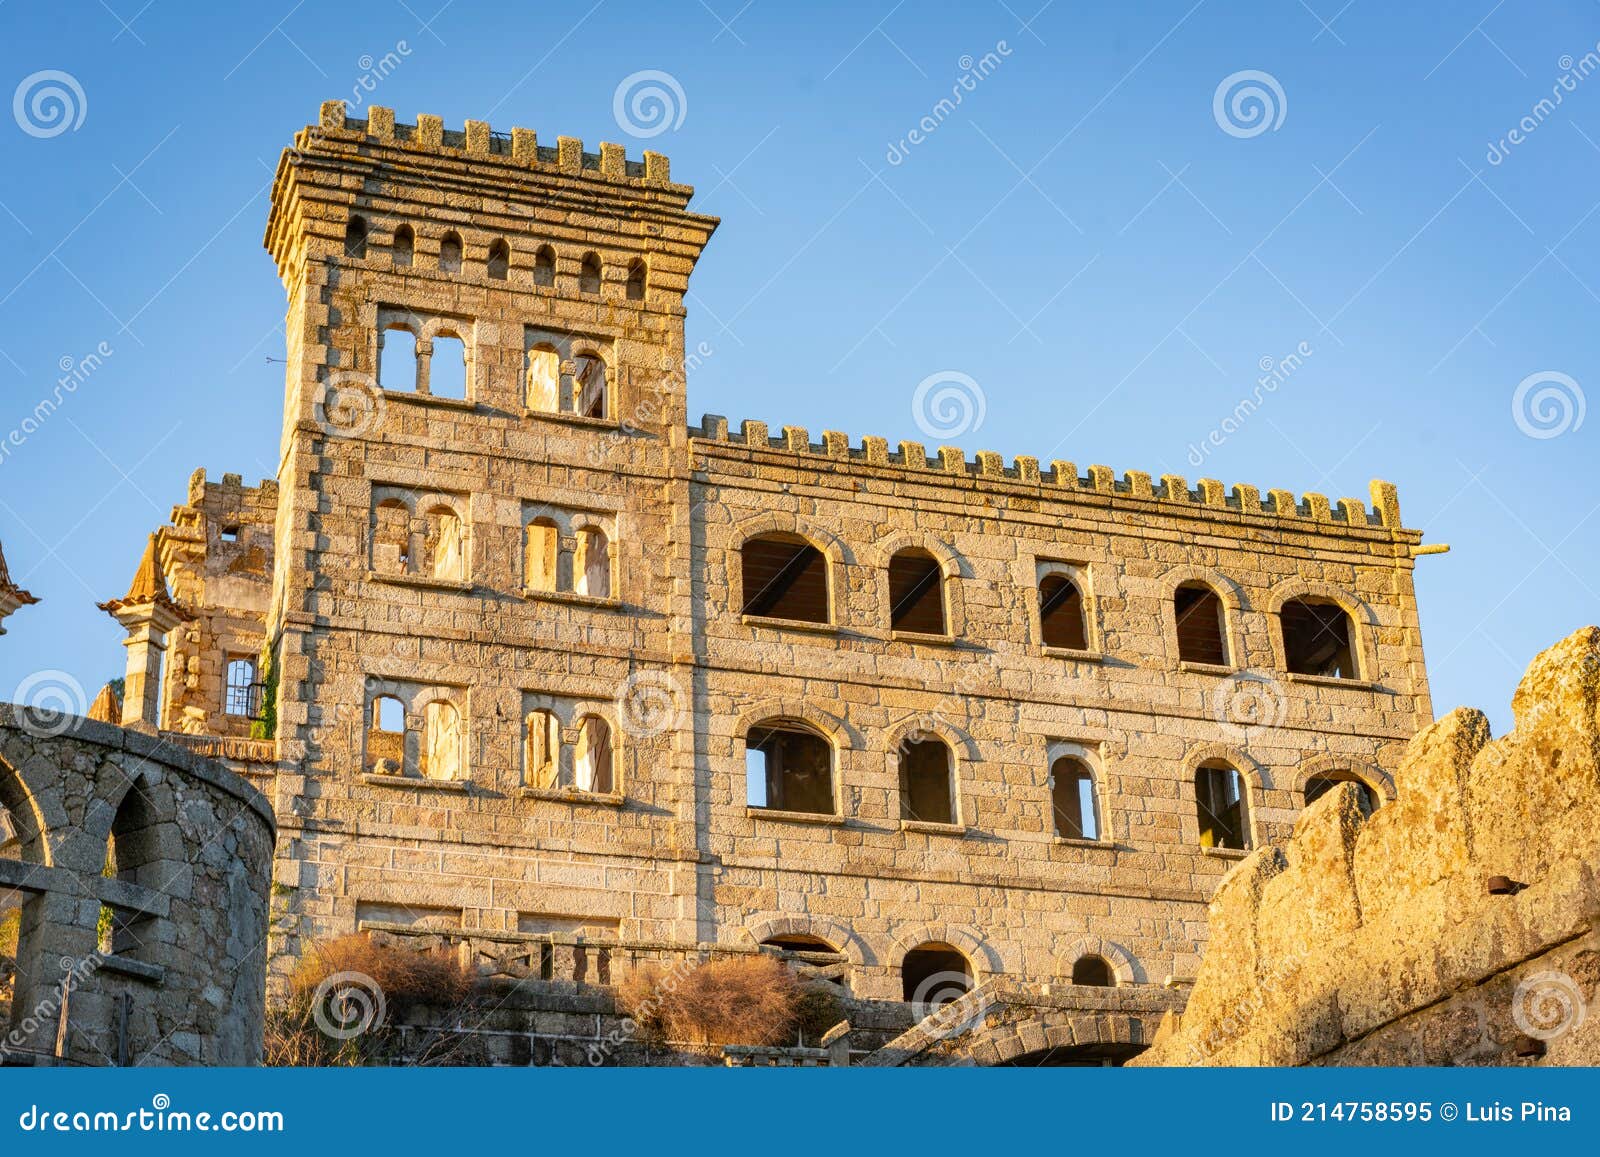 abandoned ruin building of termas radium hotel serra da pena in sortelha, portugal